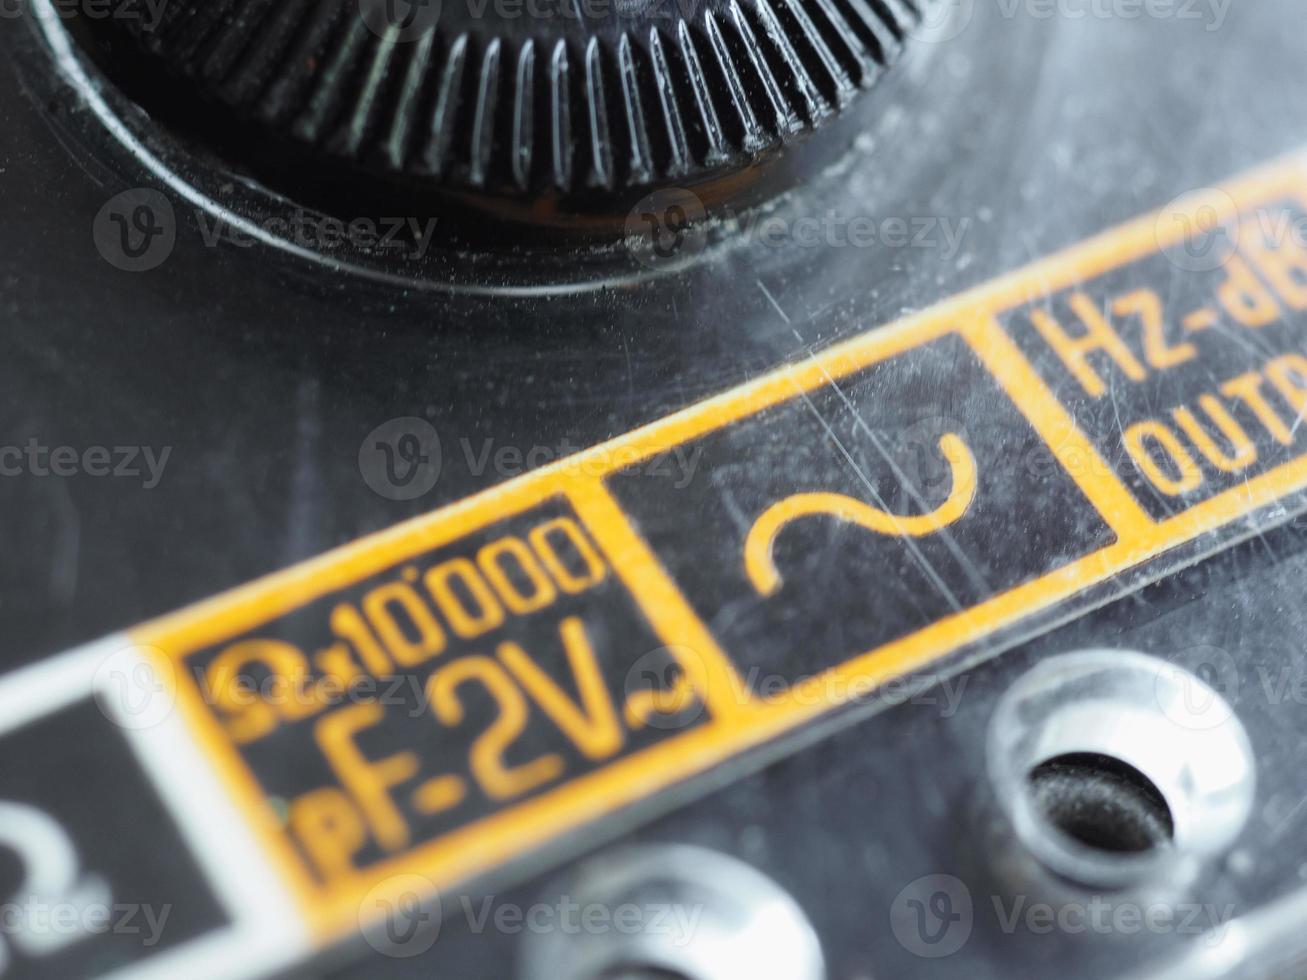 electrical symbol on vintage analog multimeter photo